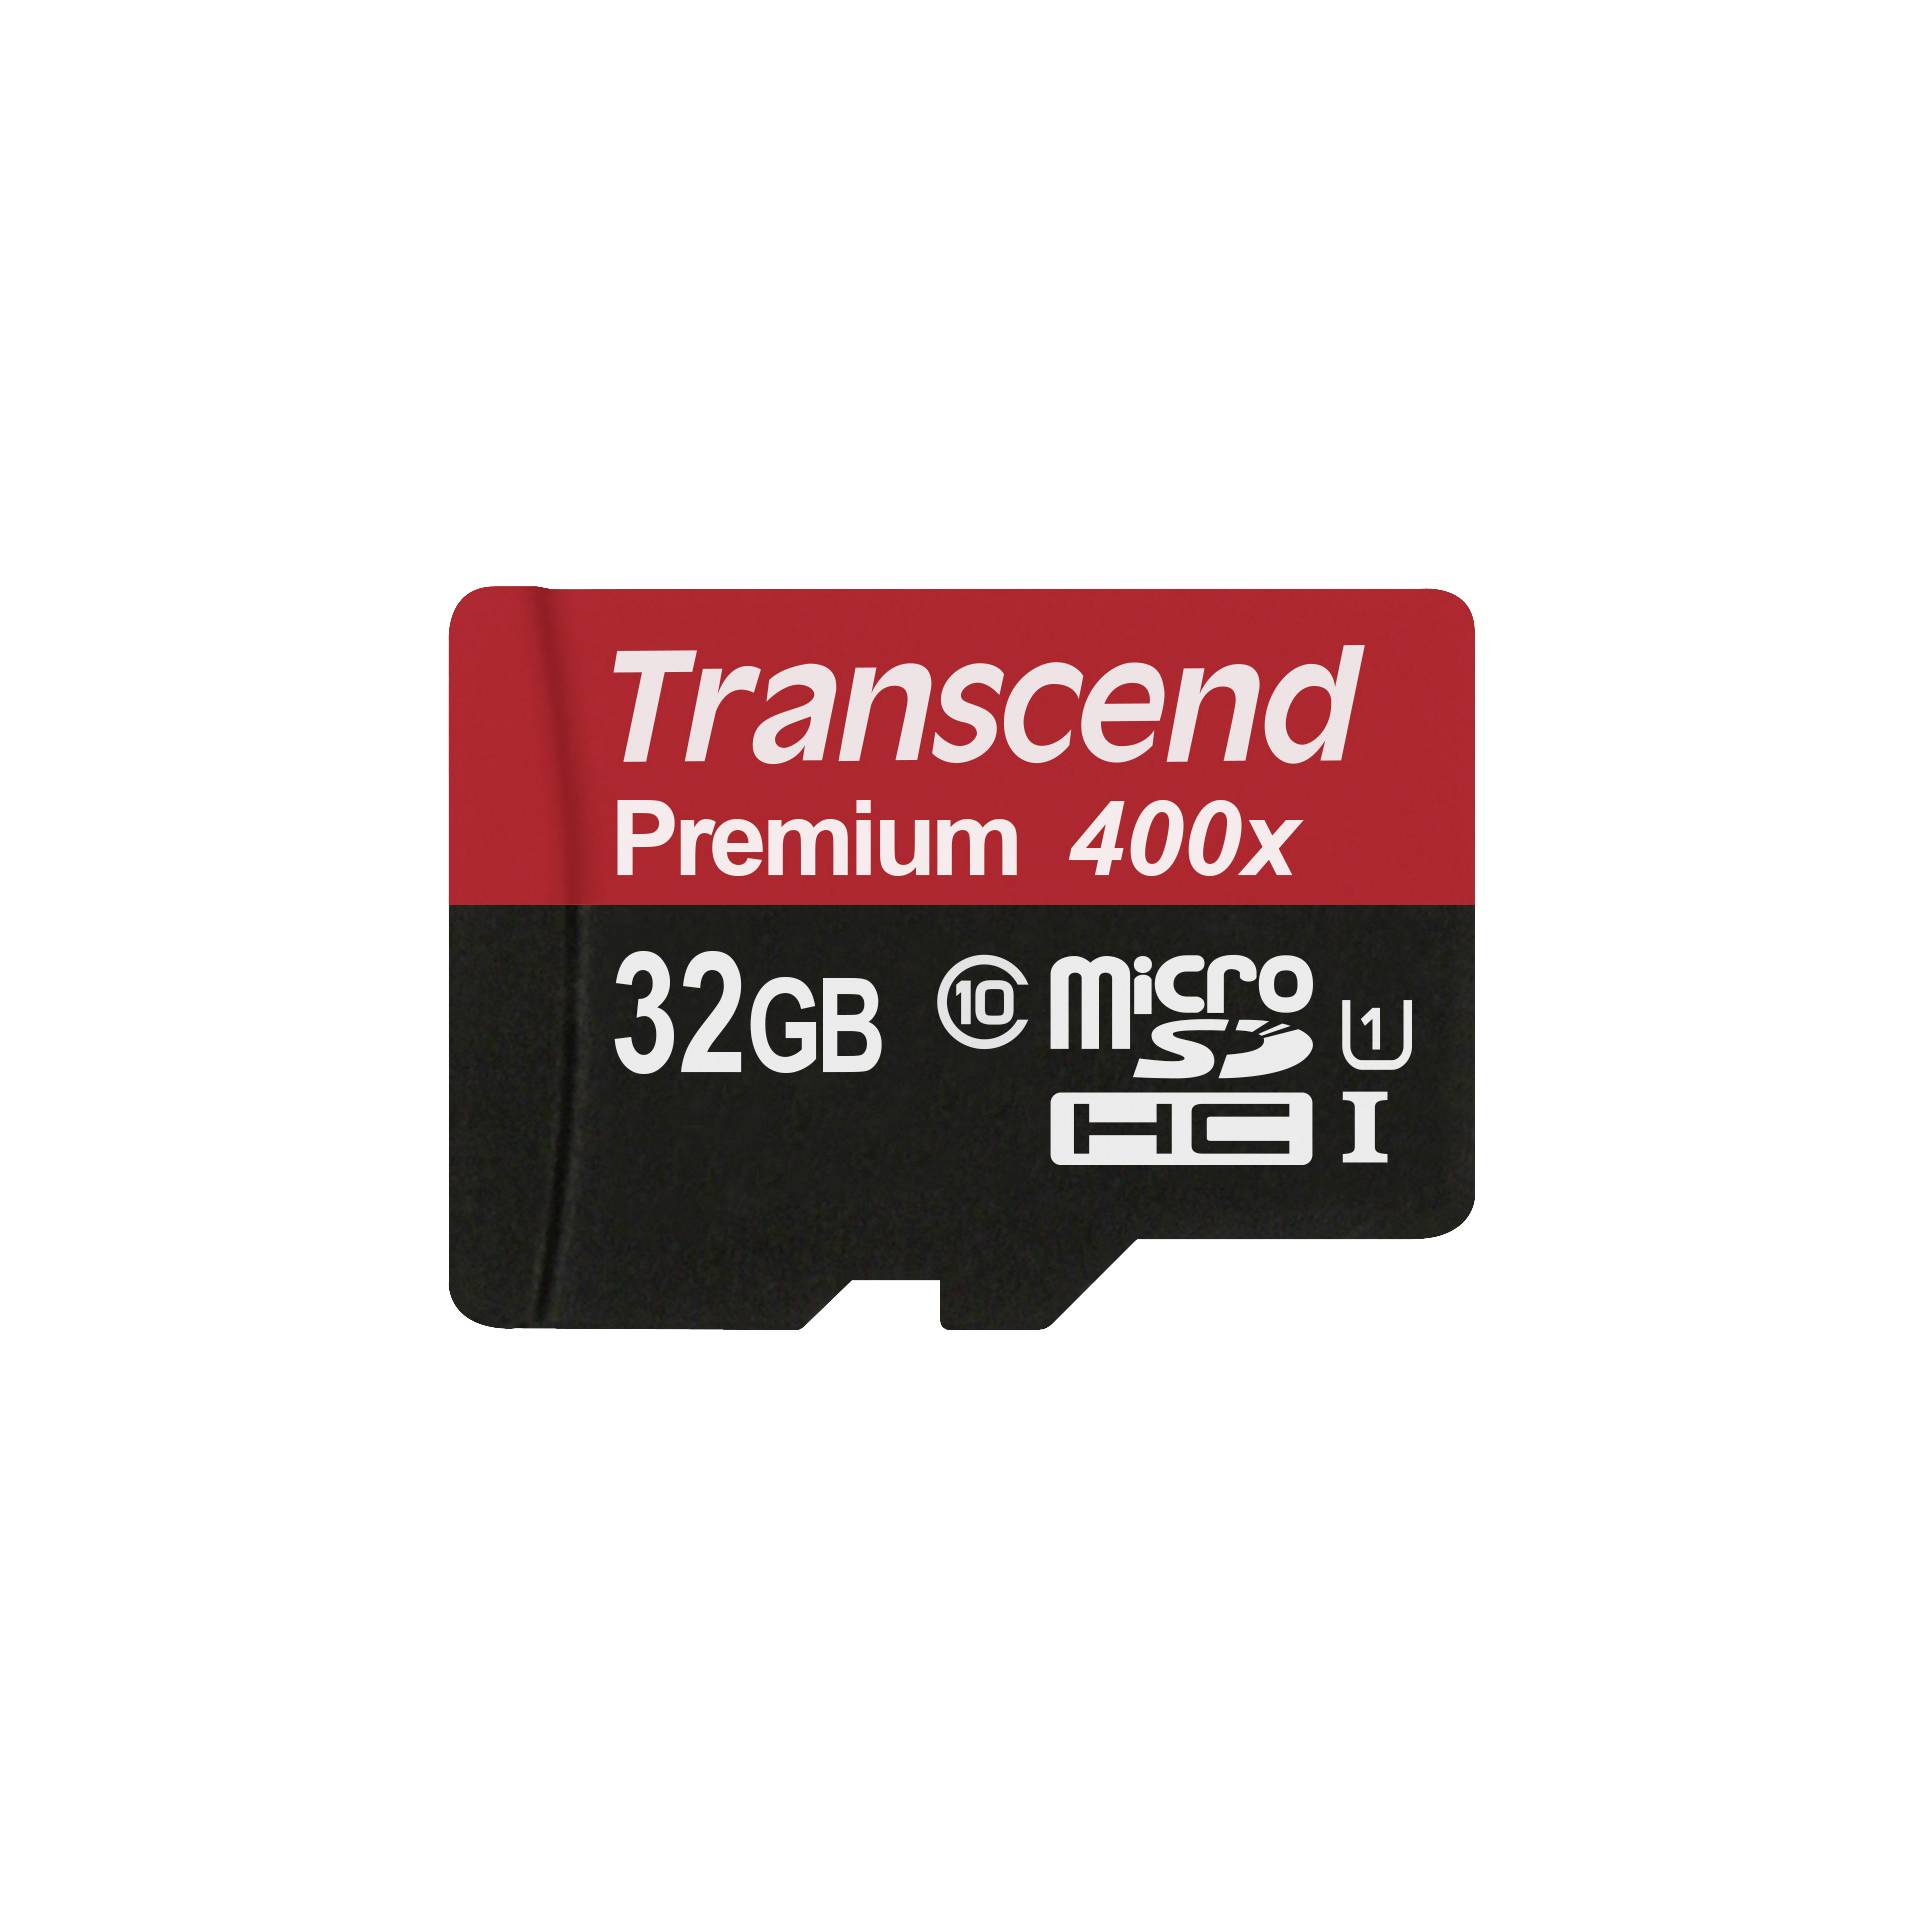 Transcend microSDHC 32GB Class 10 UHS-I 400x + SD adatt.